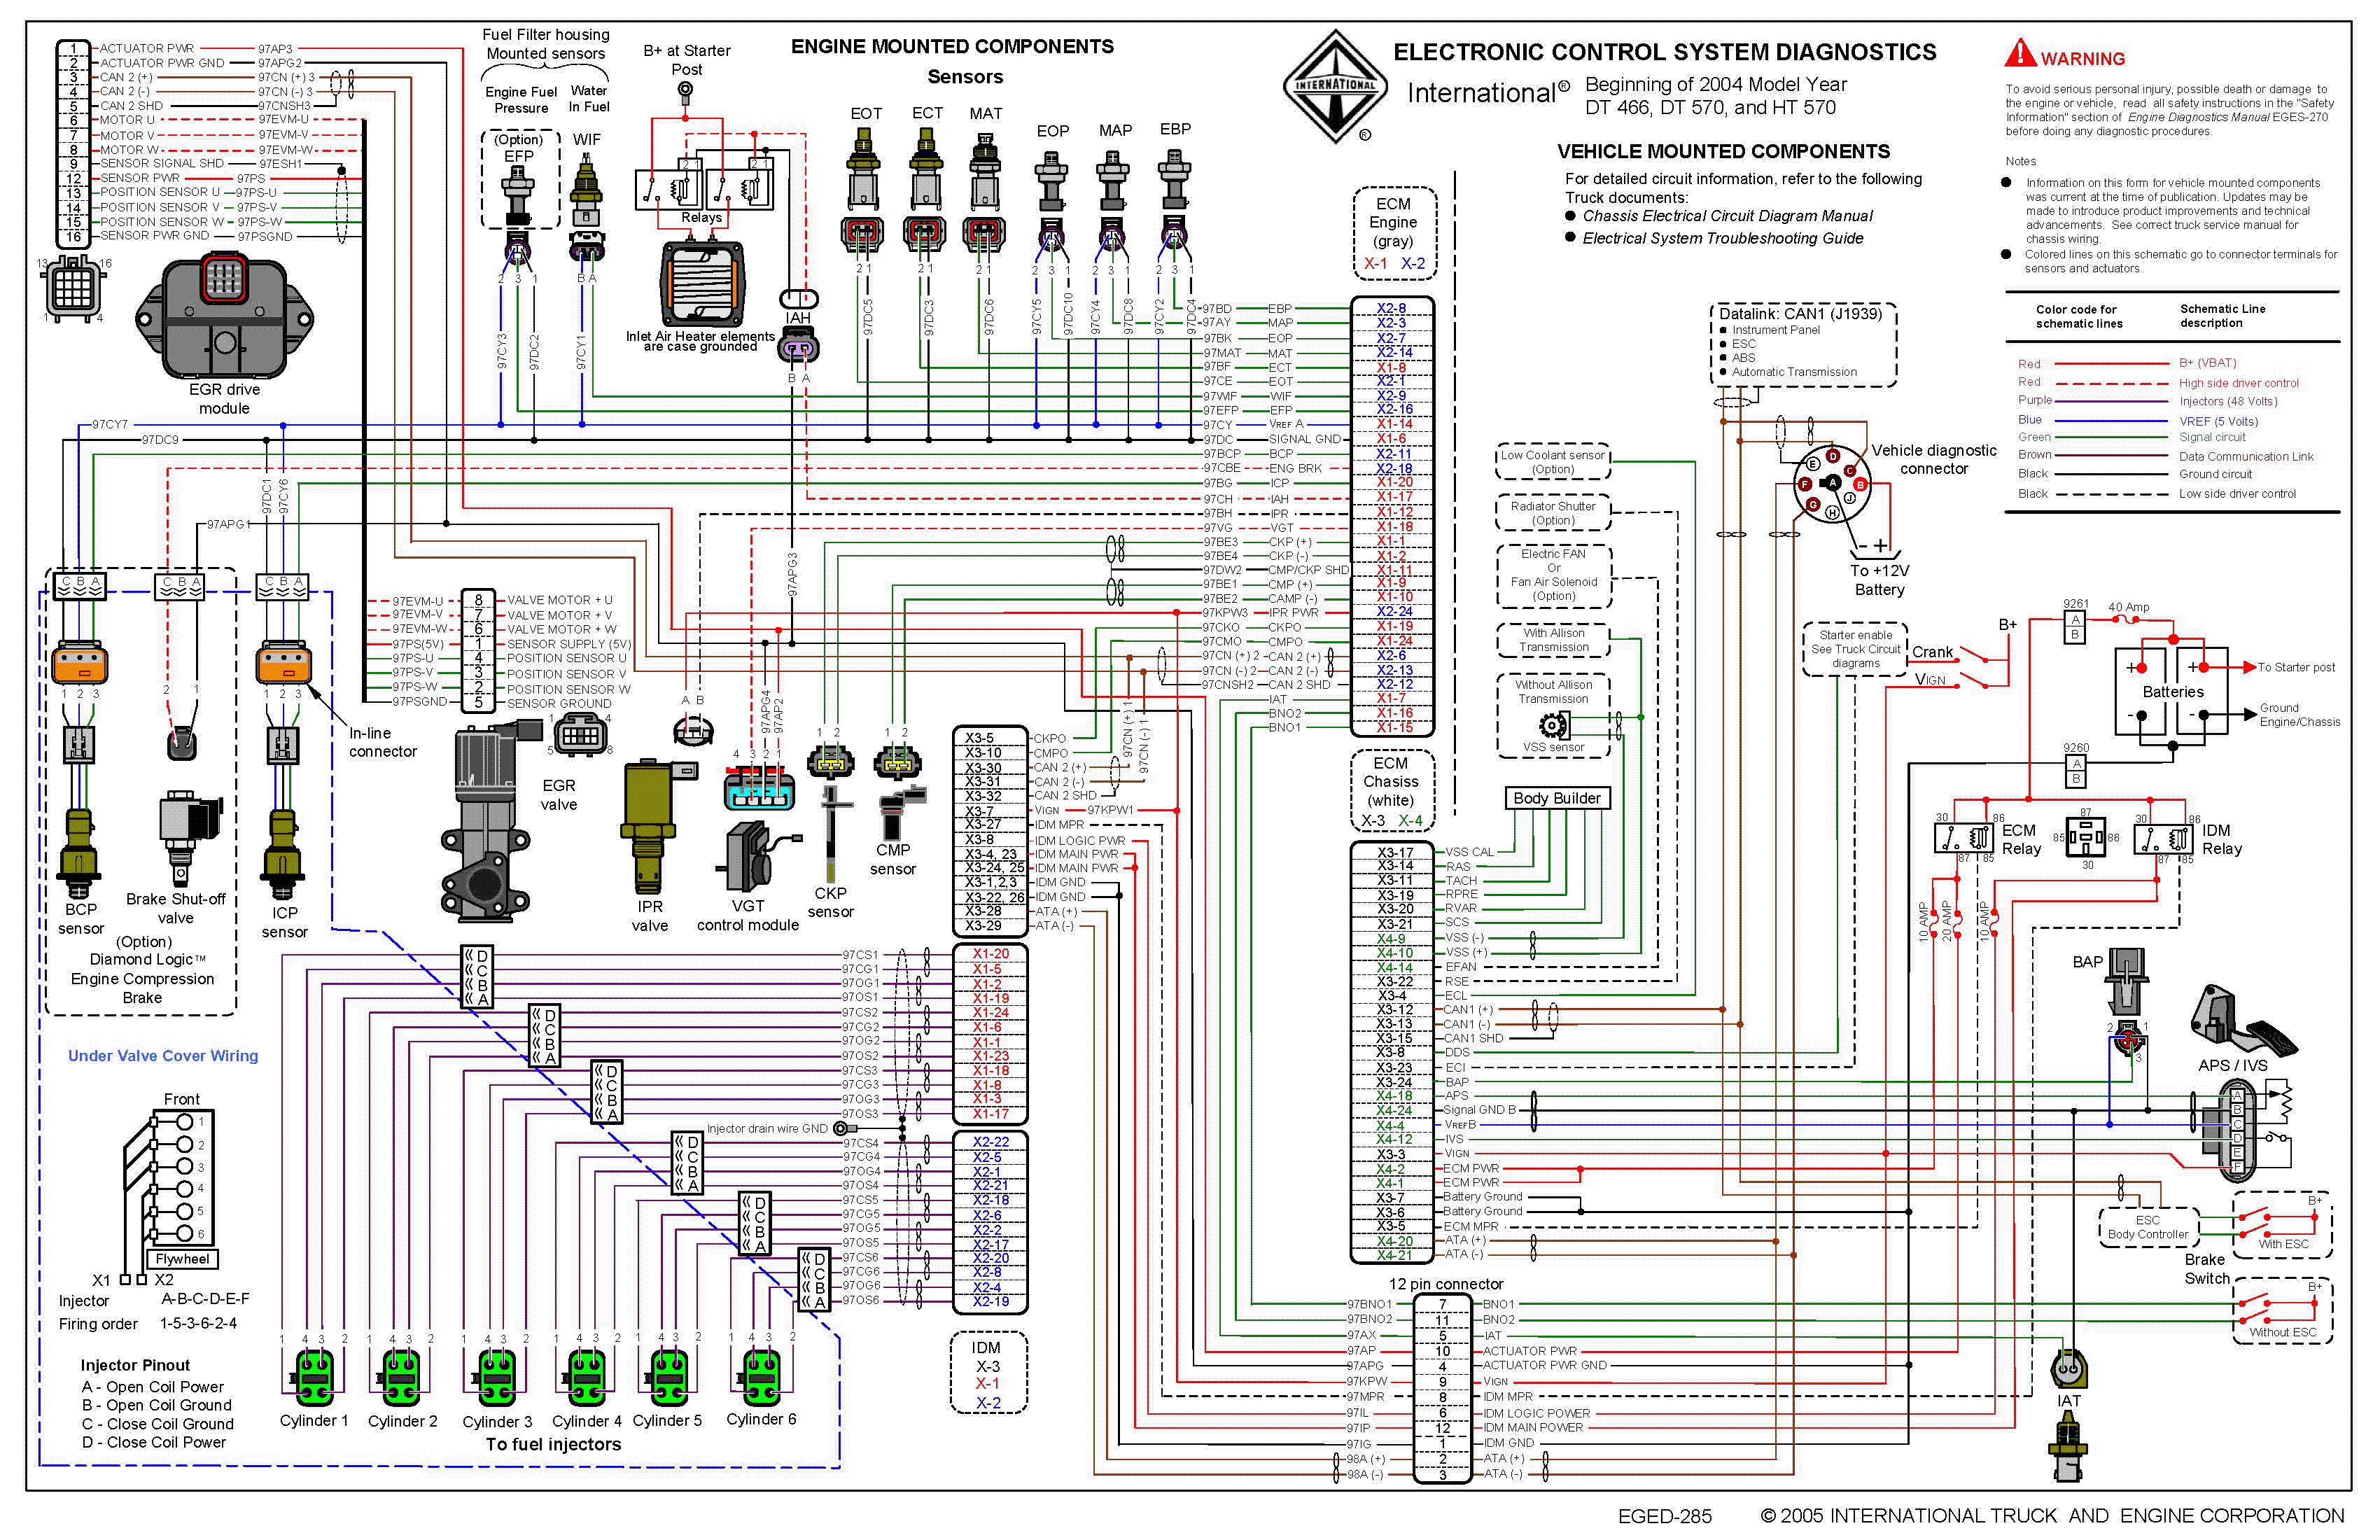 1999 international dt466e engine wiring diagram